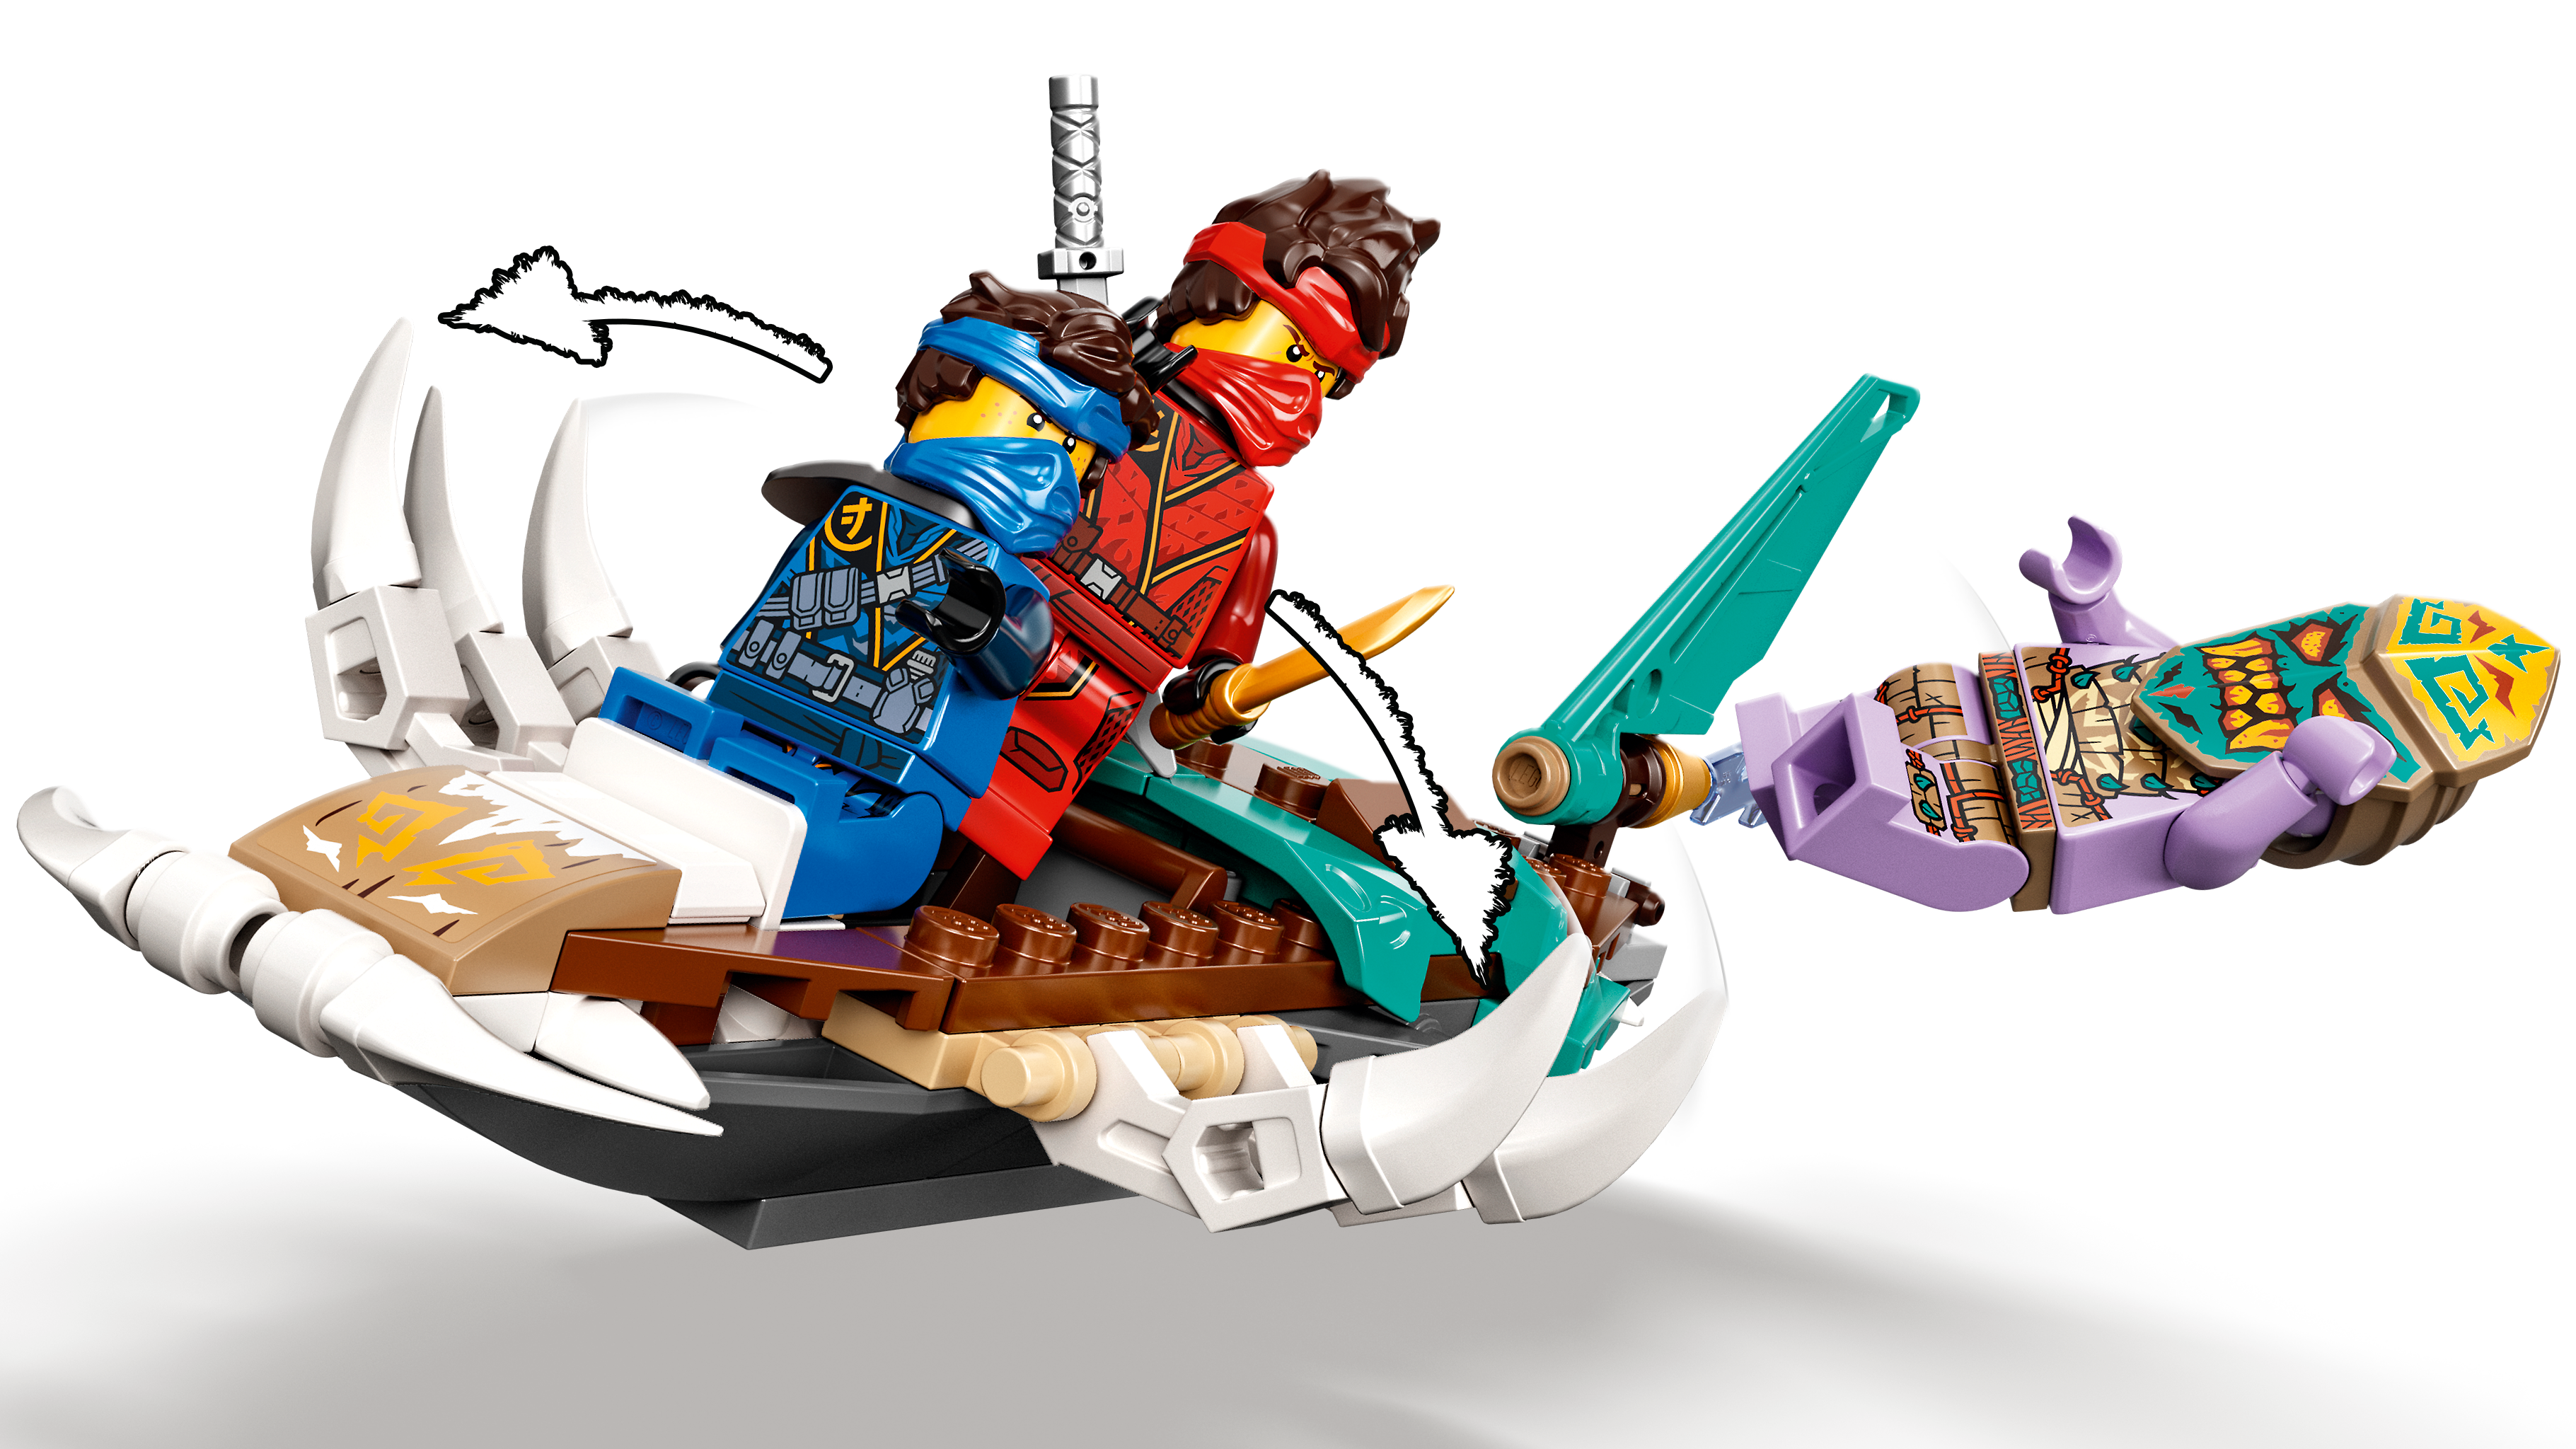 Catamaran Sea Battle 71748 Ninjago Buy Online At The Official Lego Shop Us